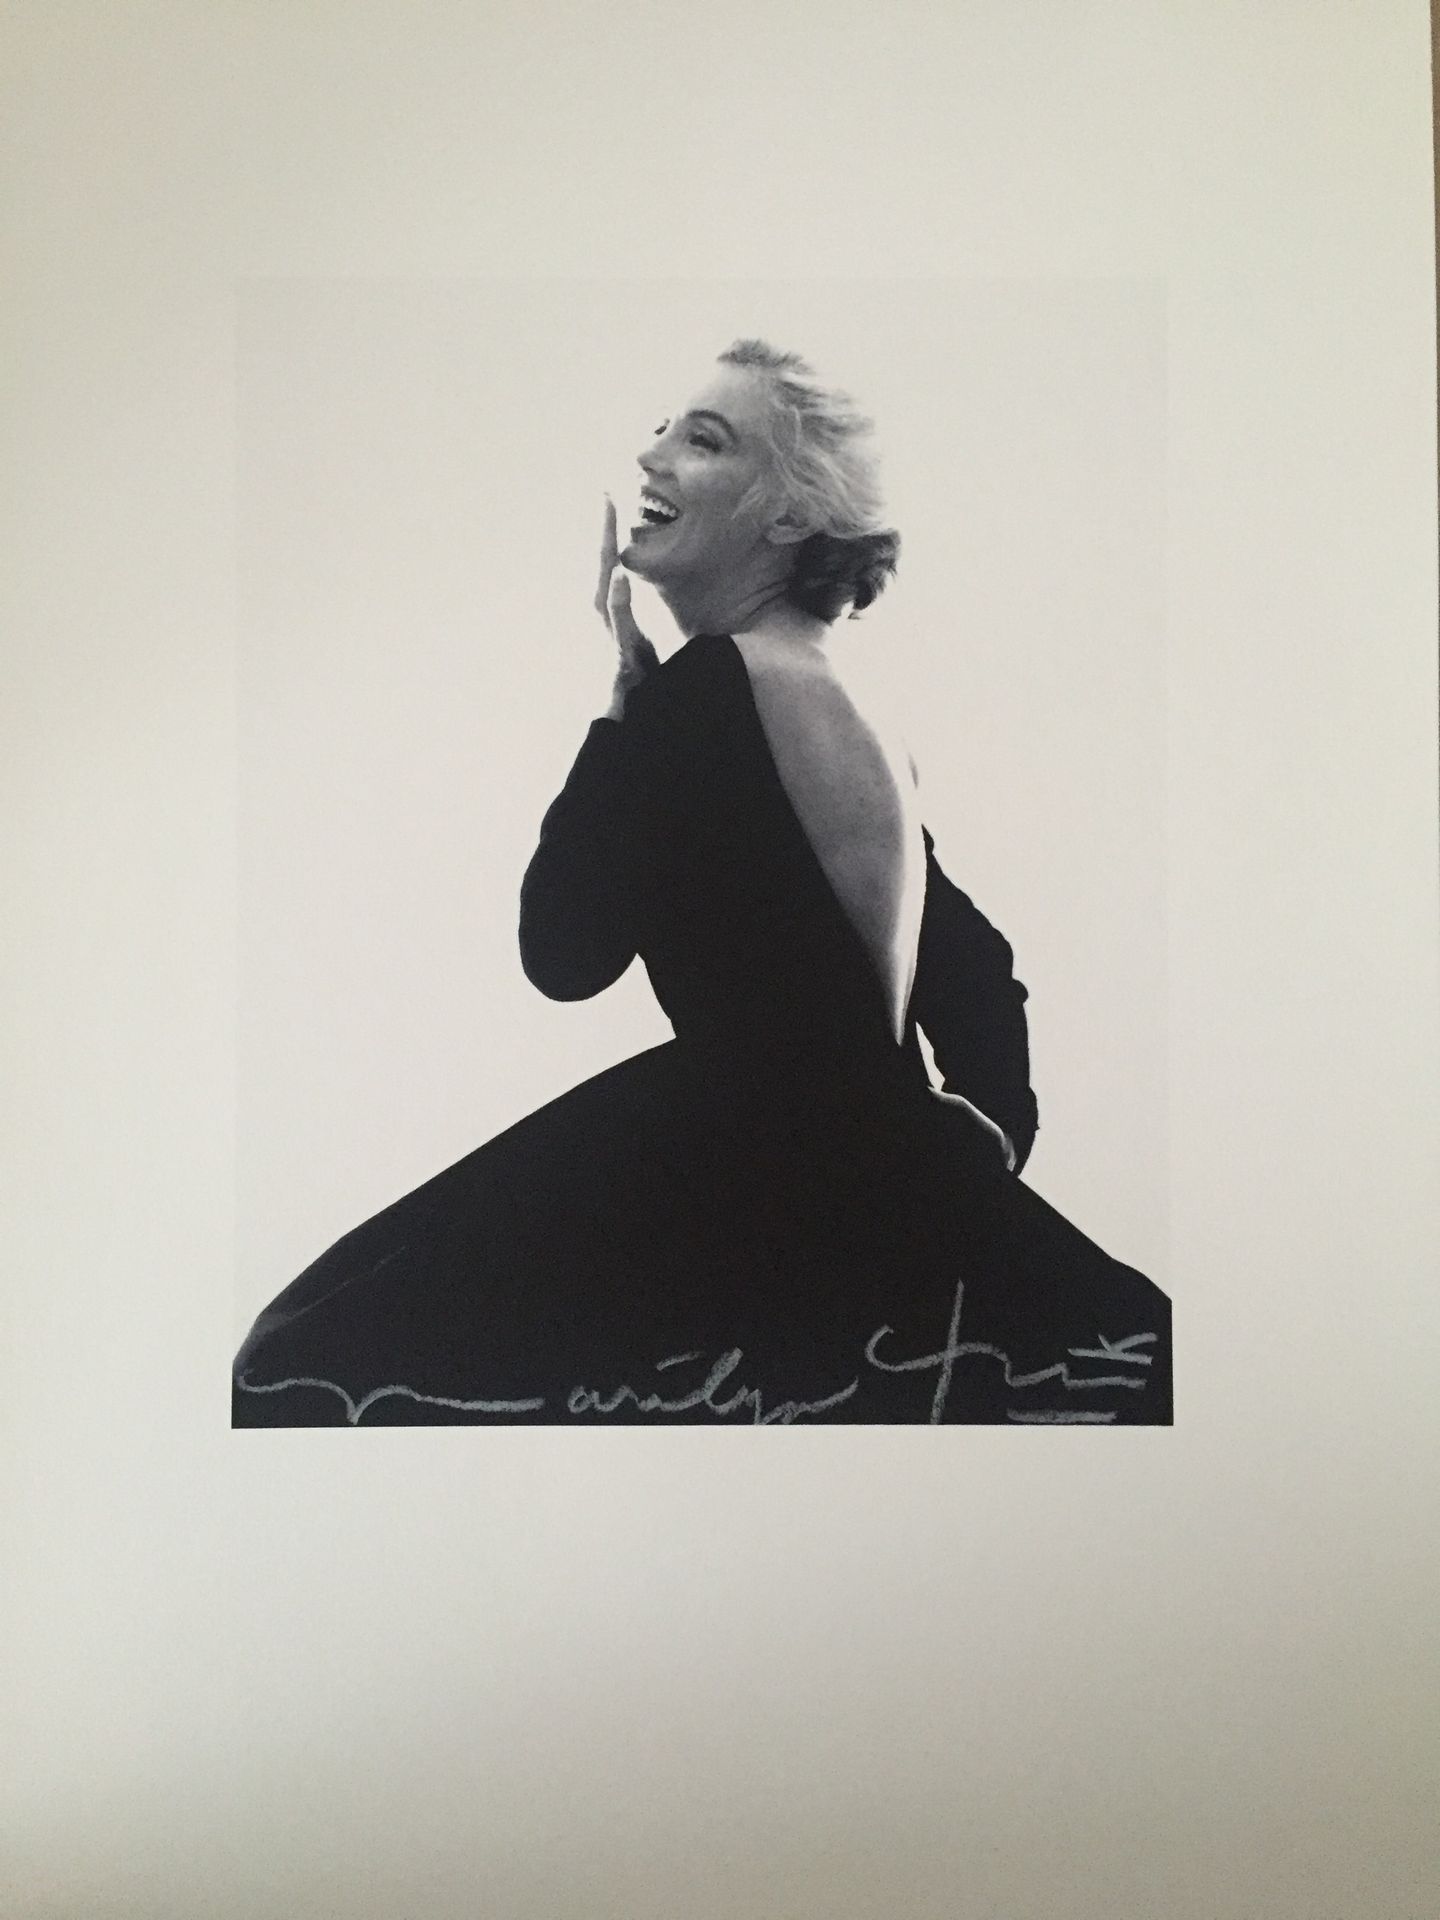 Bert STERN Bert STERN (1929-2013)

Marilyn che ride in abito nero, 2011

 

 Mar&hellip;